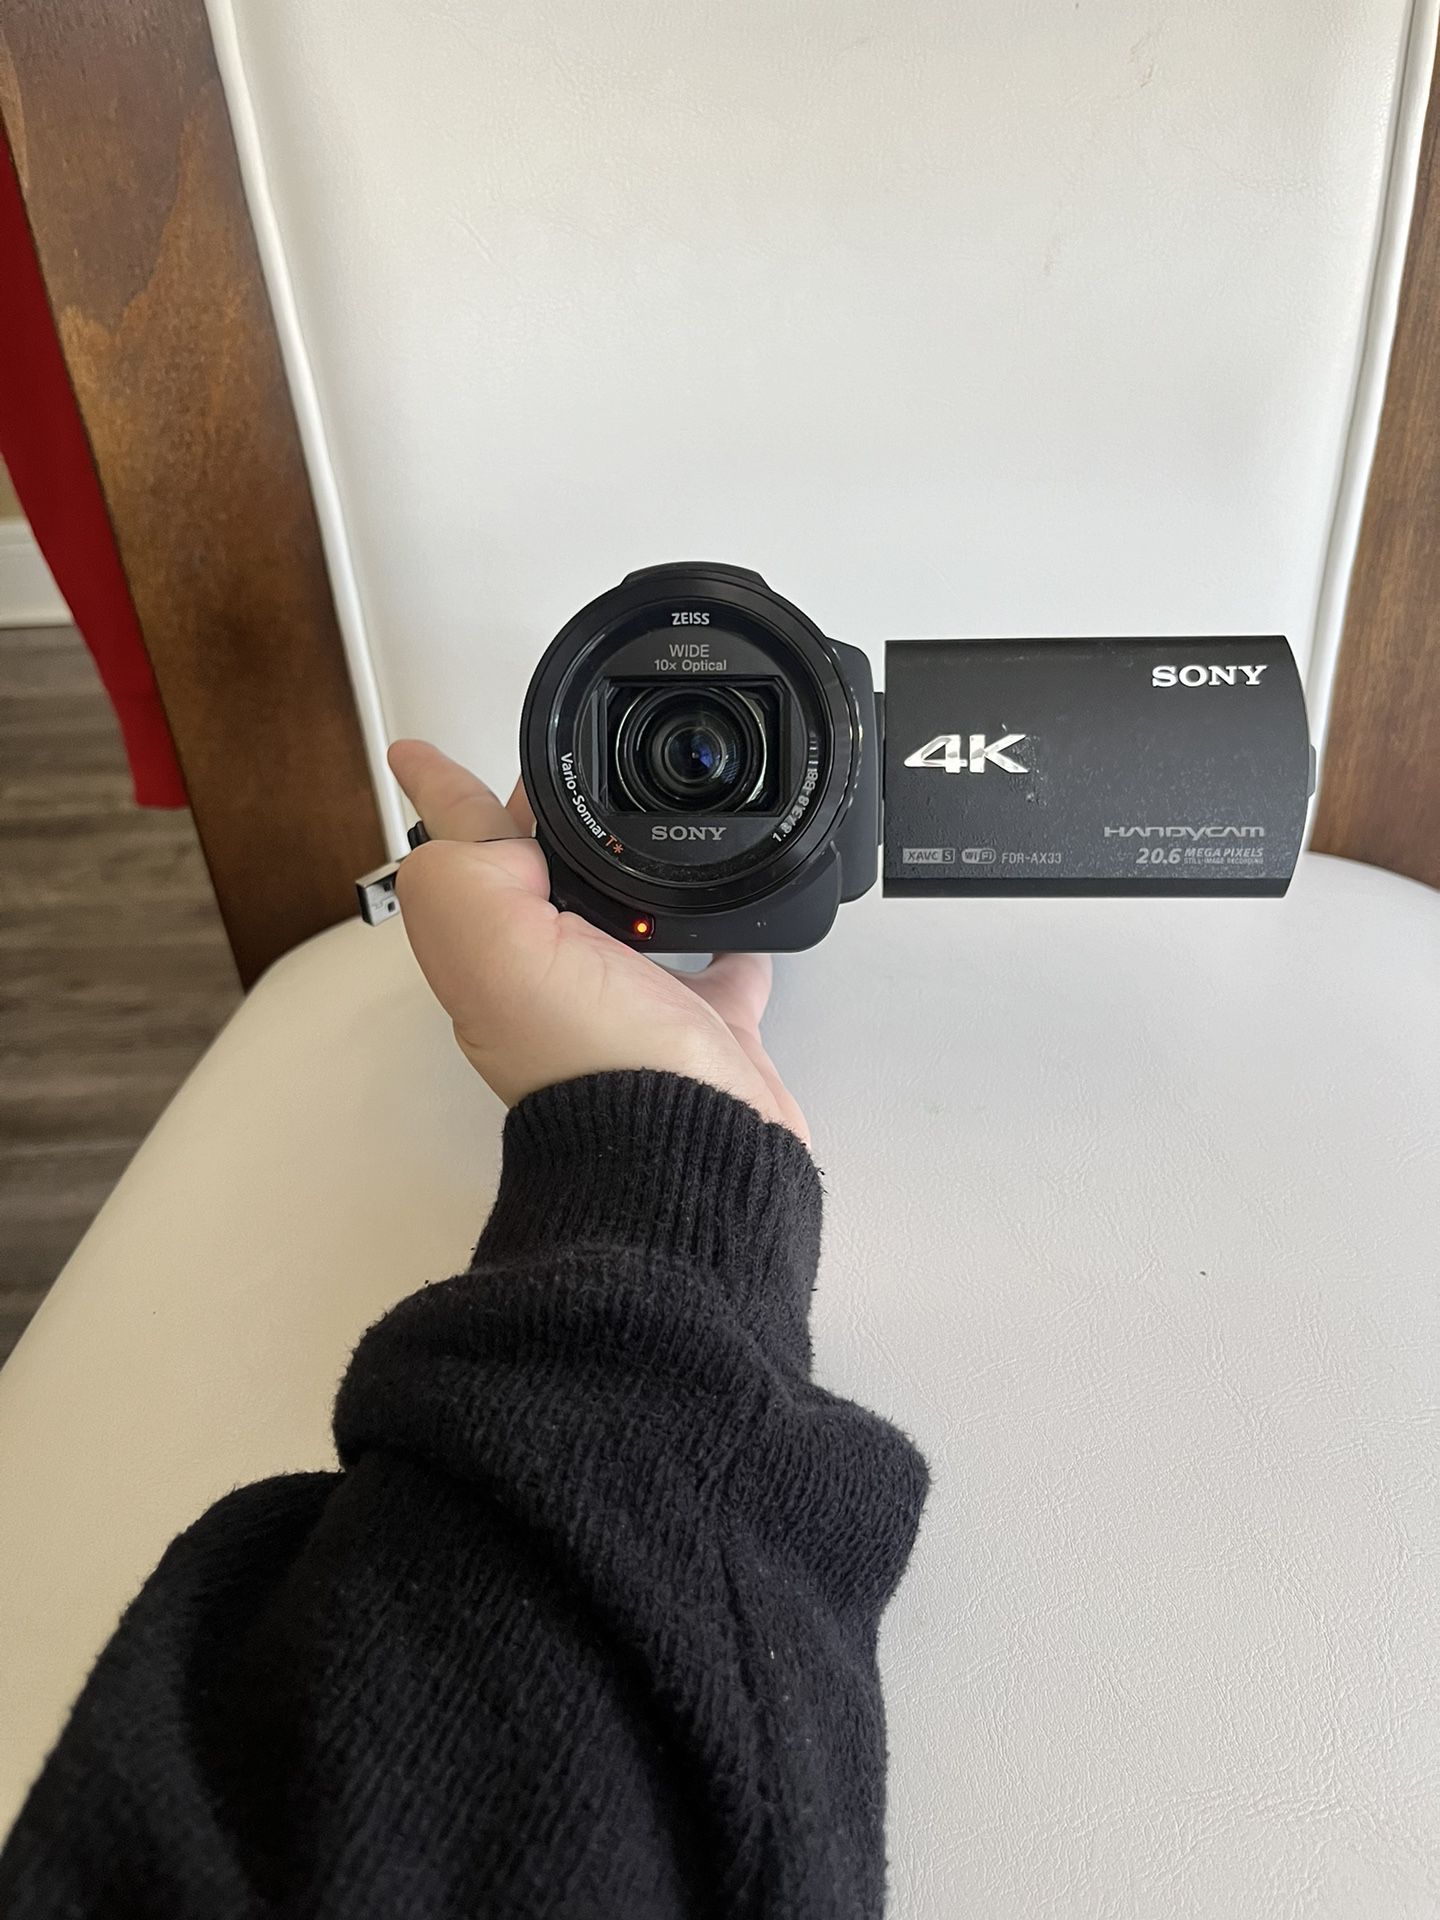 Sony 4k Handycam FDR- AX33